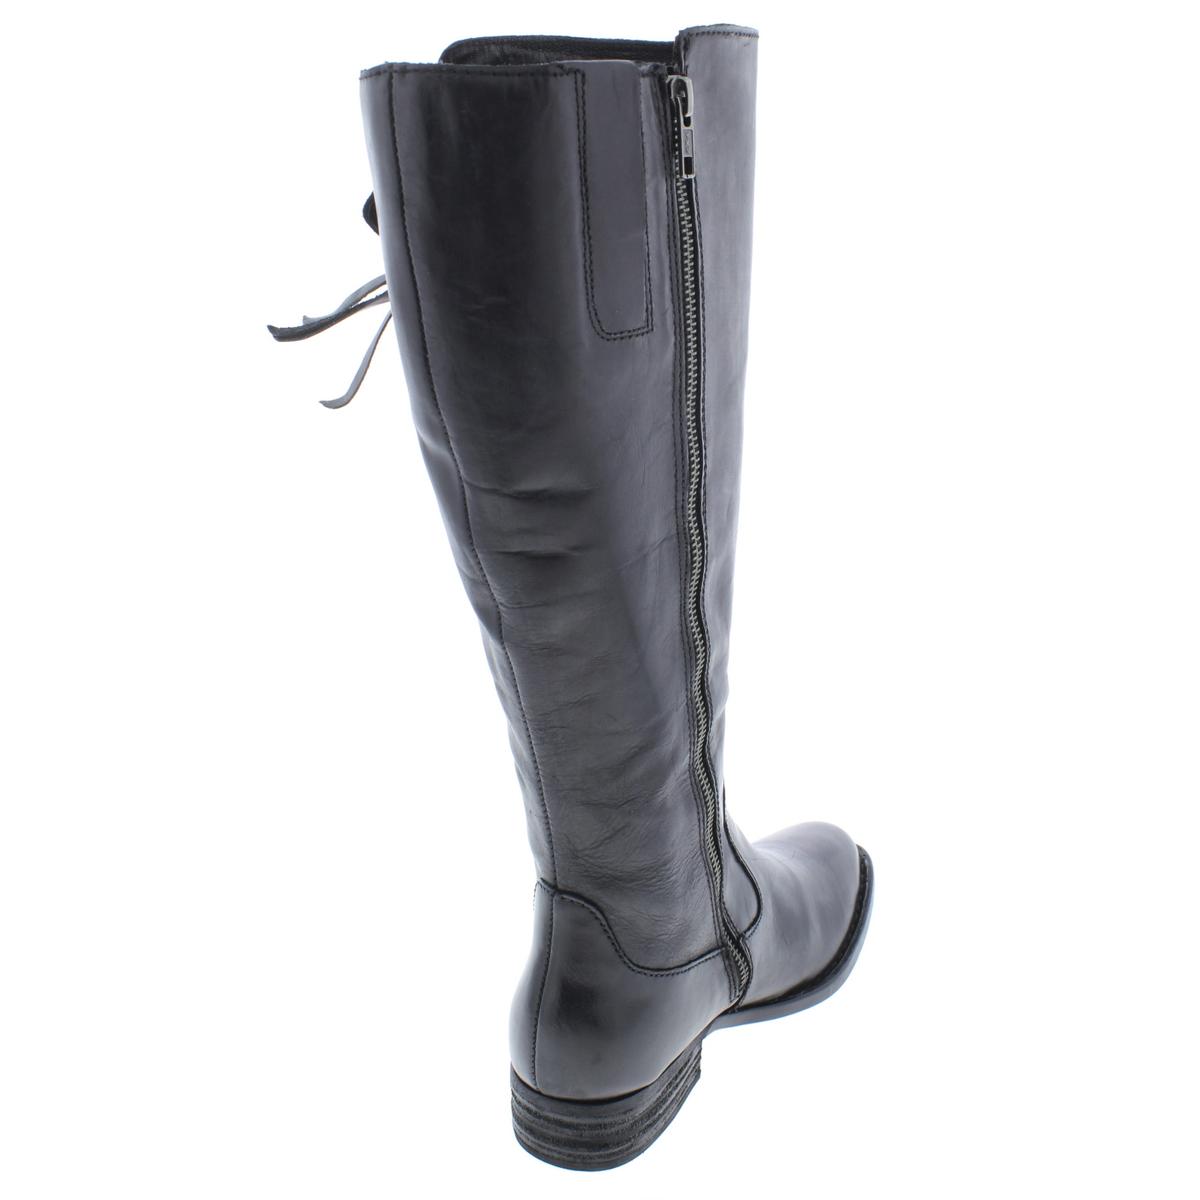 Born Womens Cook Black Wide Calf Riding Boots Heels 9.5 Medium (B,M) BHFO 5992 | eBay